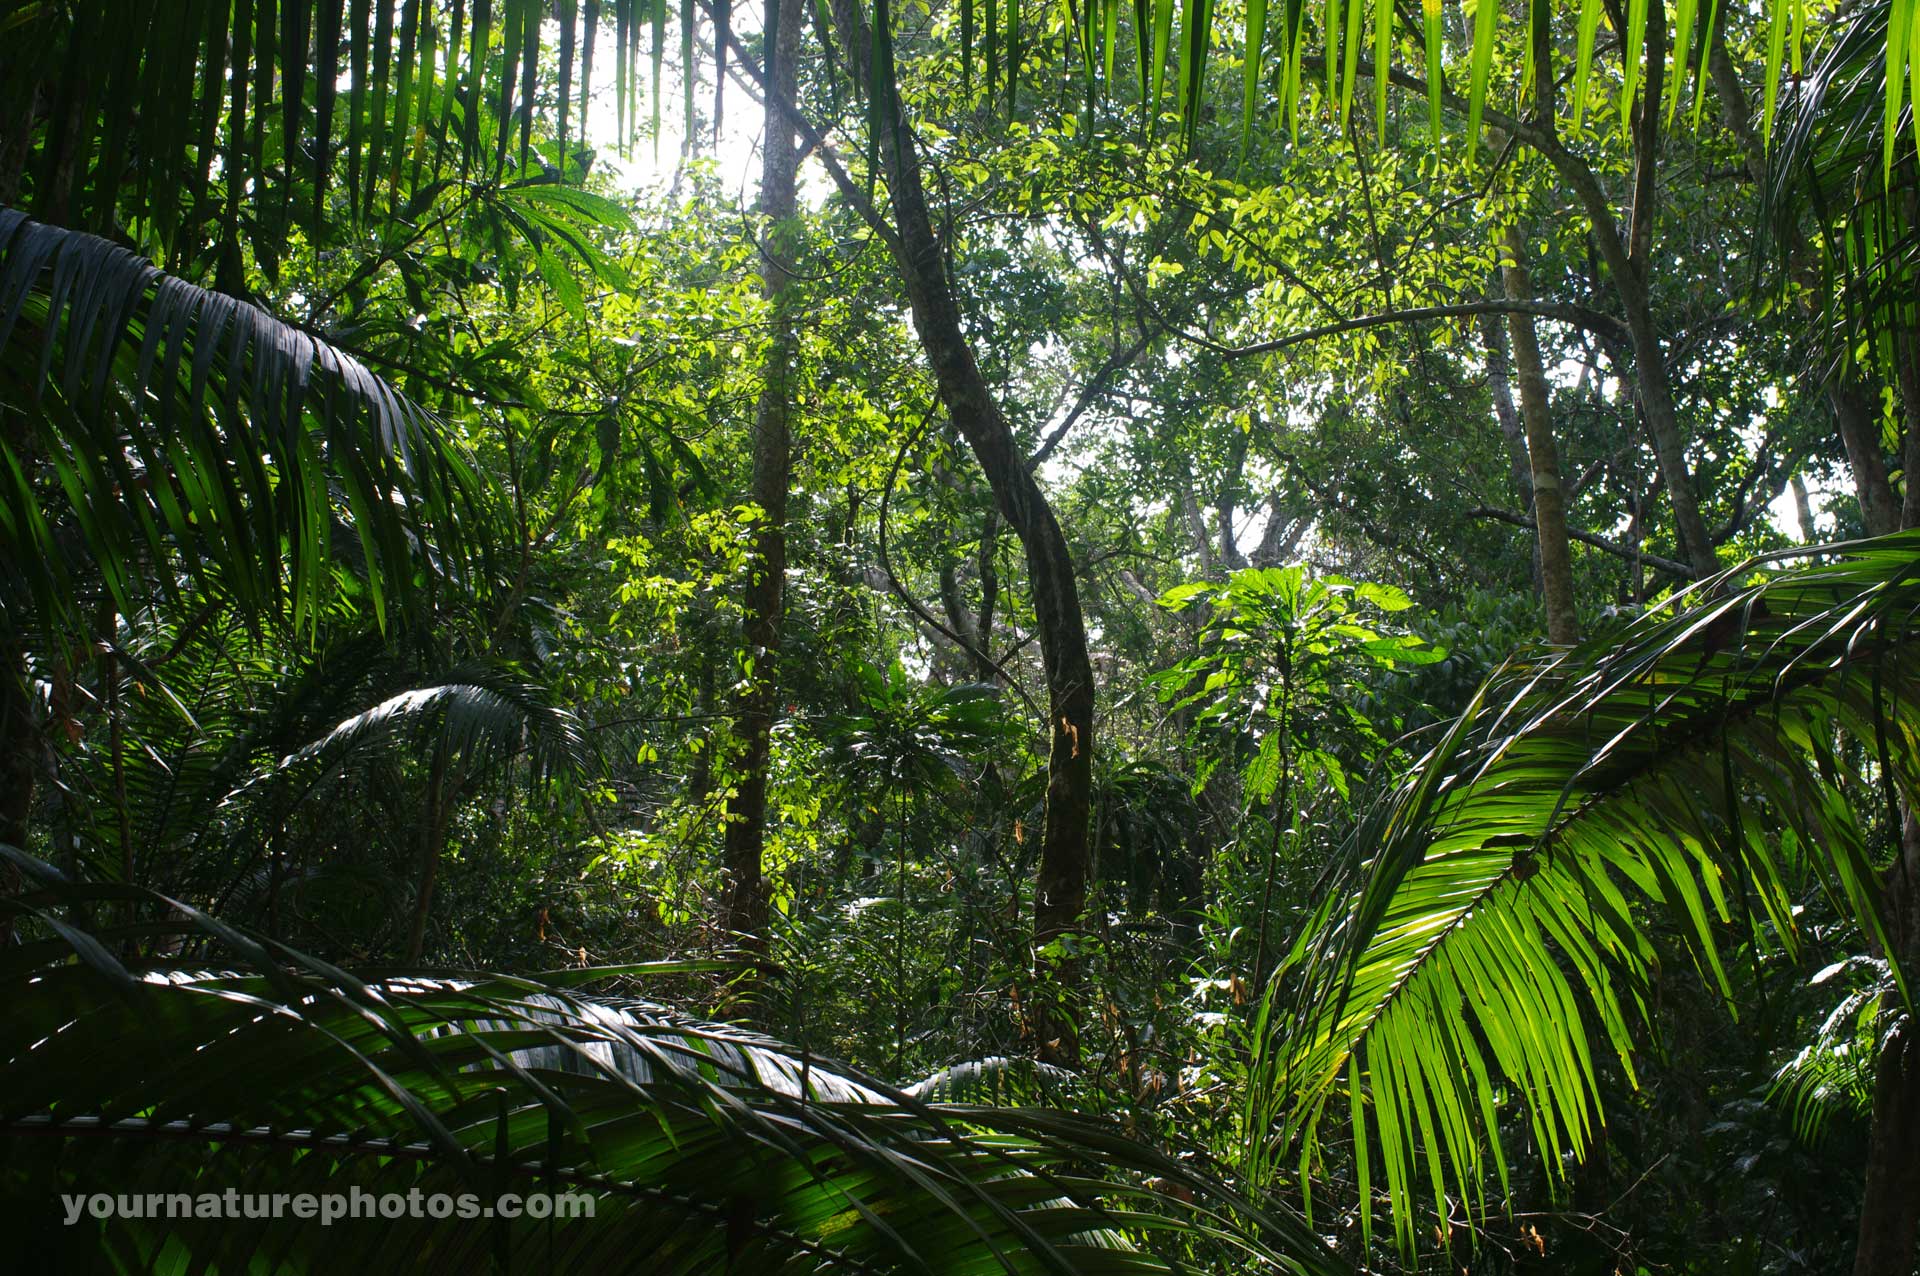 Jungle Scene Panama Rainforest Yournaturephotos HD